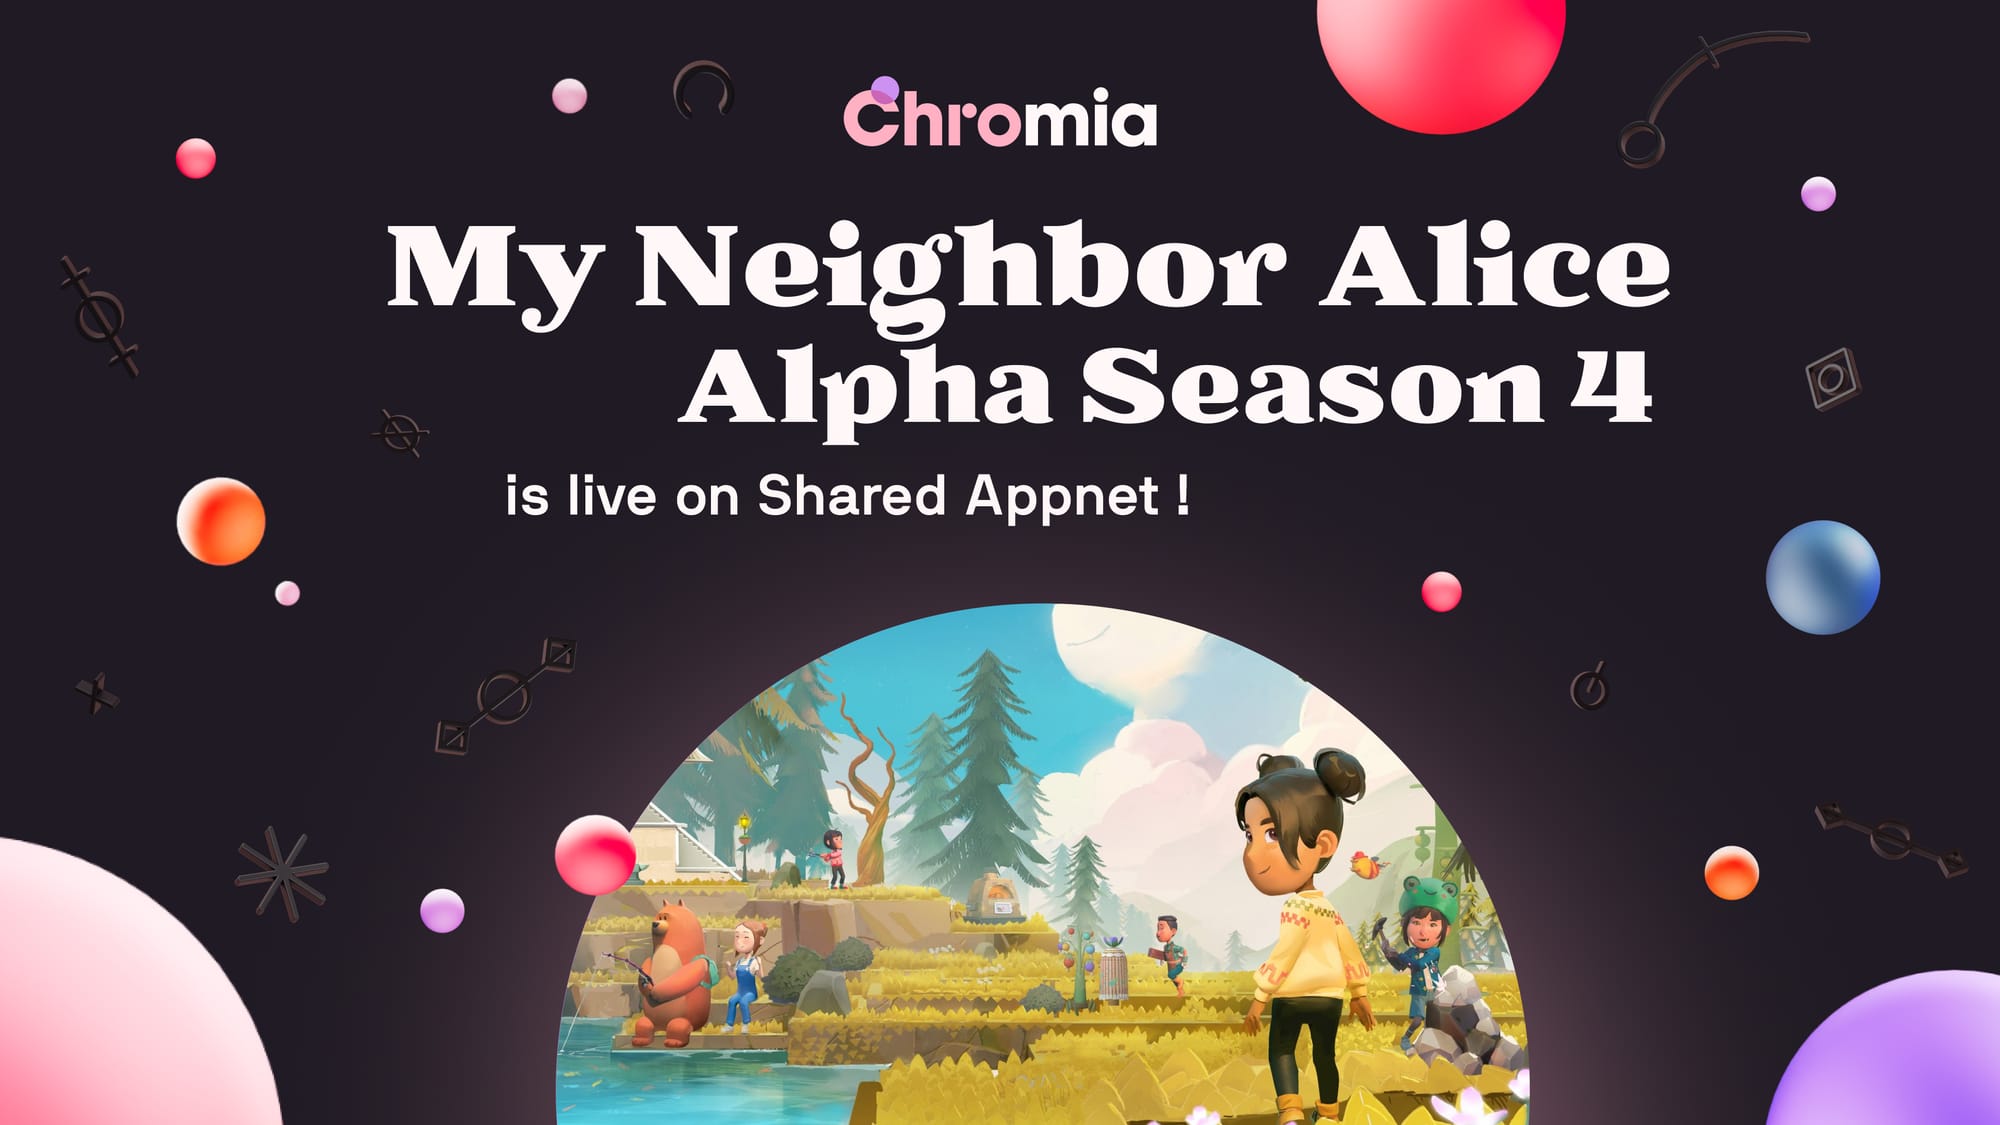 My Neighbor Alice Alpha Season 4 is live on Shared Appnet